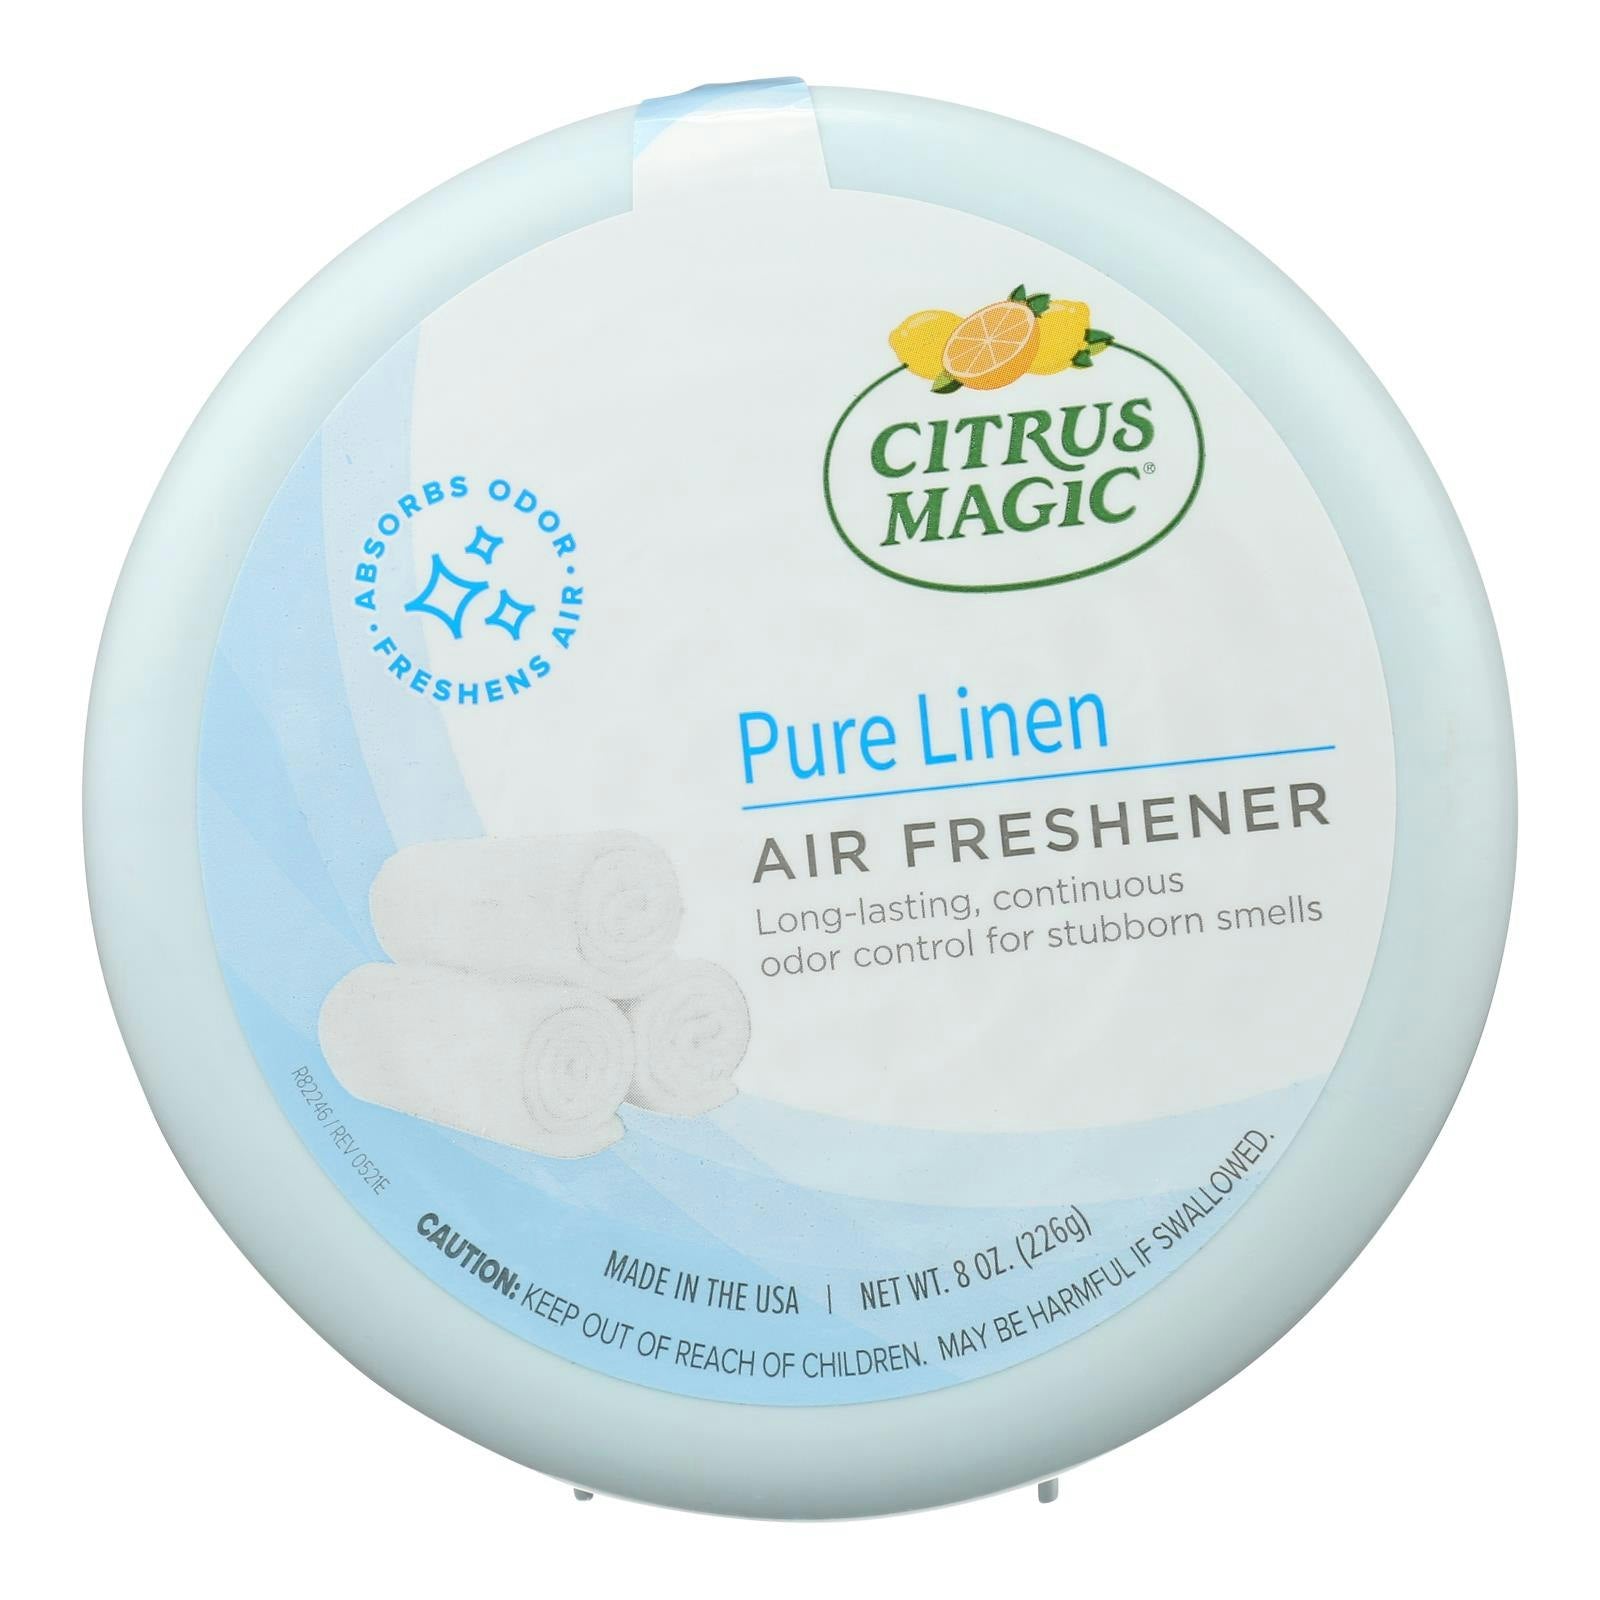 Citrus Magic Solid Air Freshener - Pure Linen 8 oz (Pack of 6)